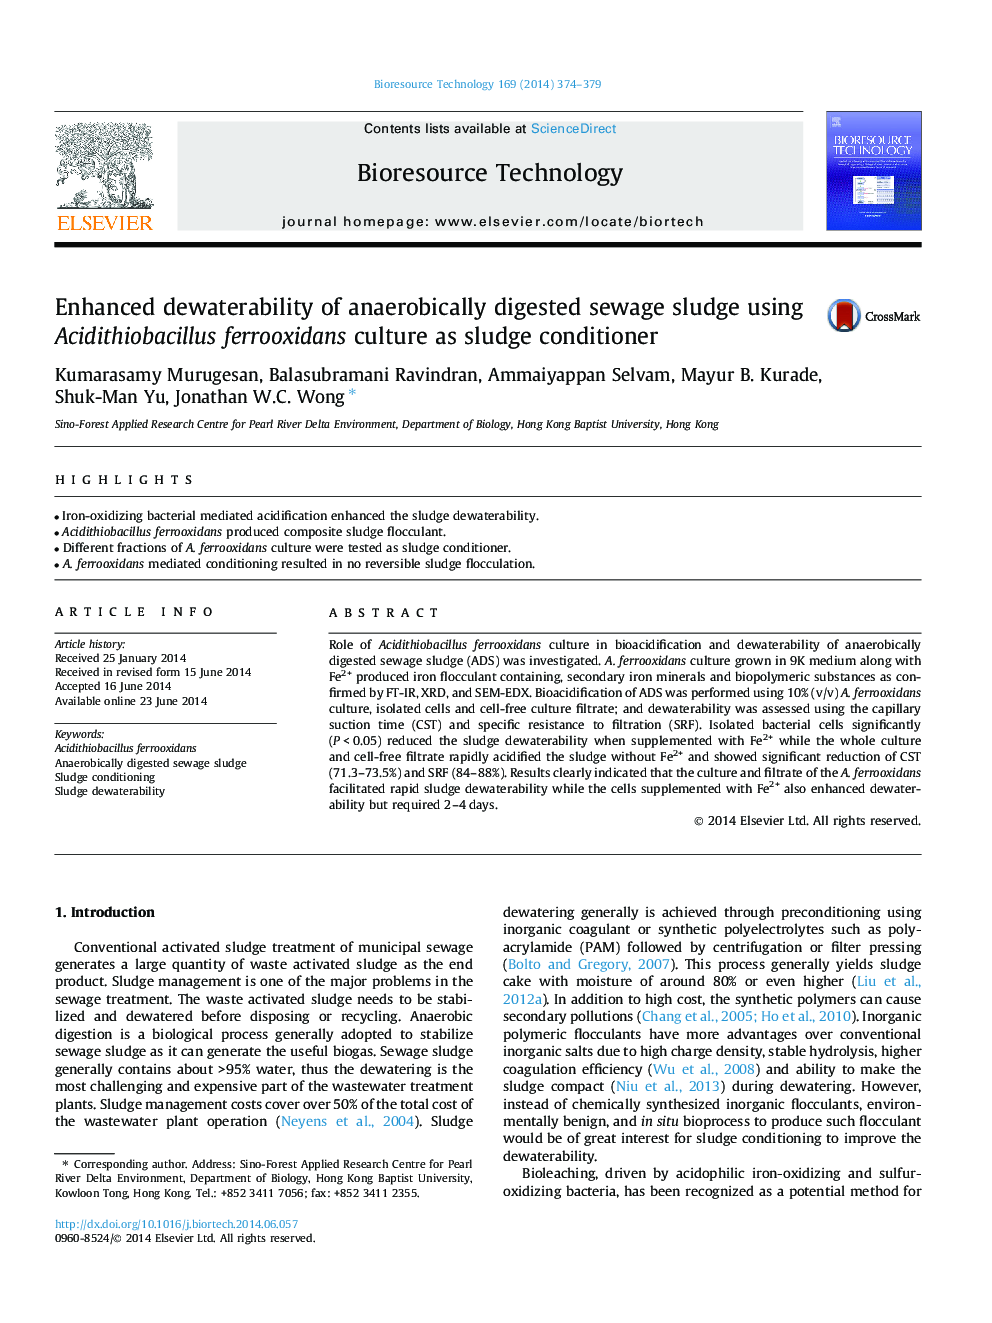 Enhanced dewaterability of anaerobically digested sewage sludge using Acidithiobacillus ferrooxidans culture as sludge conditioner